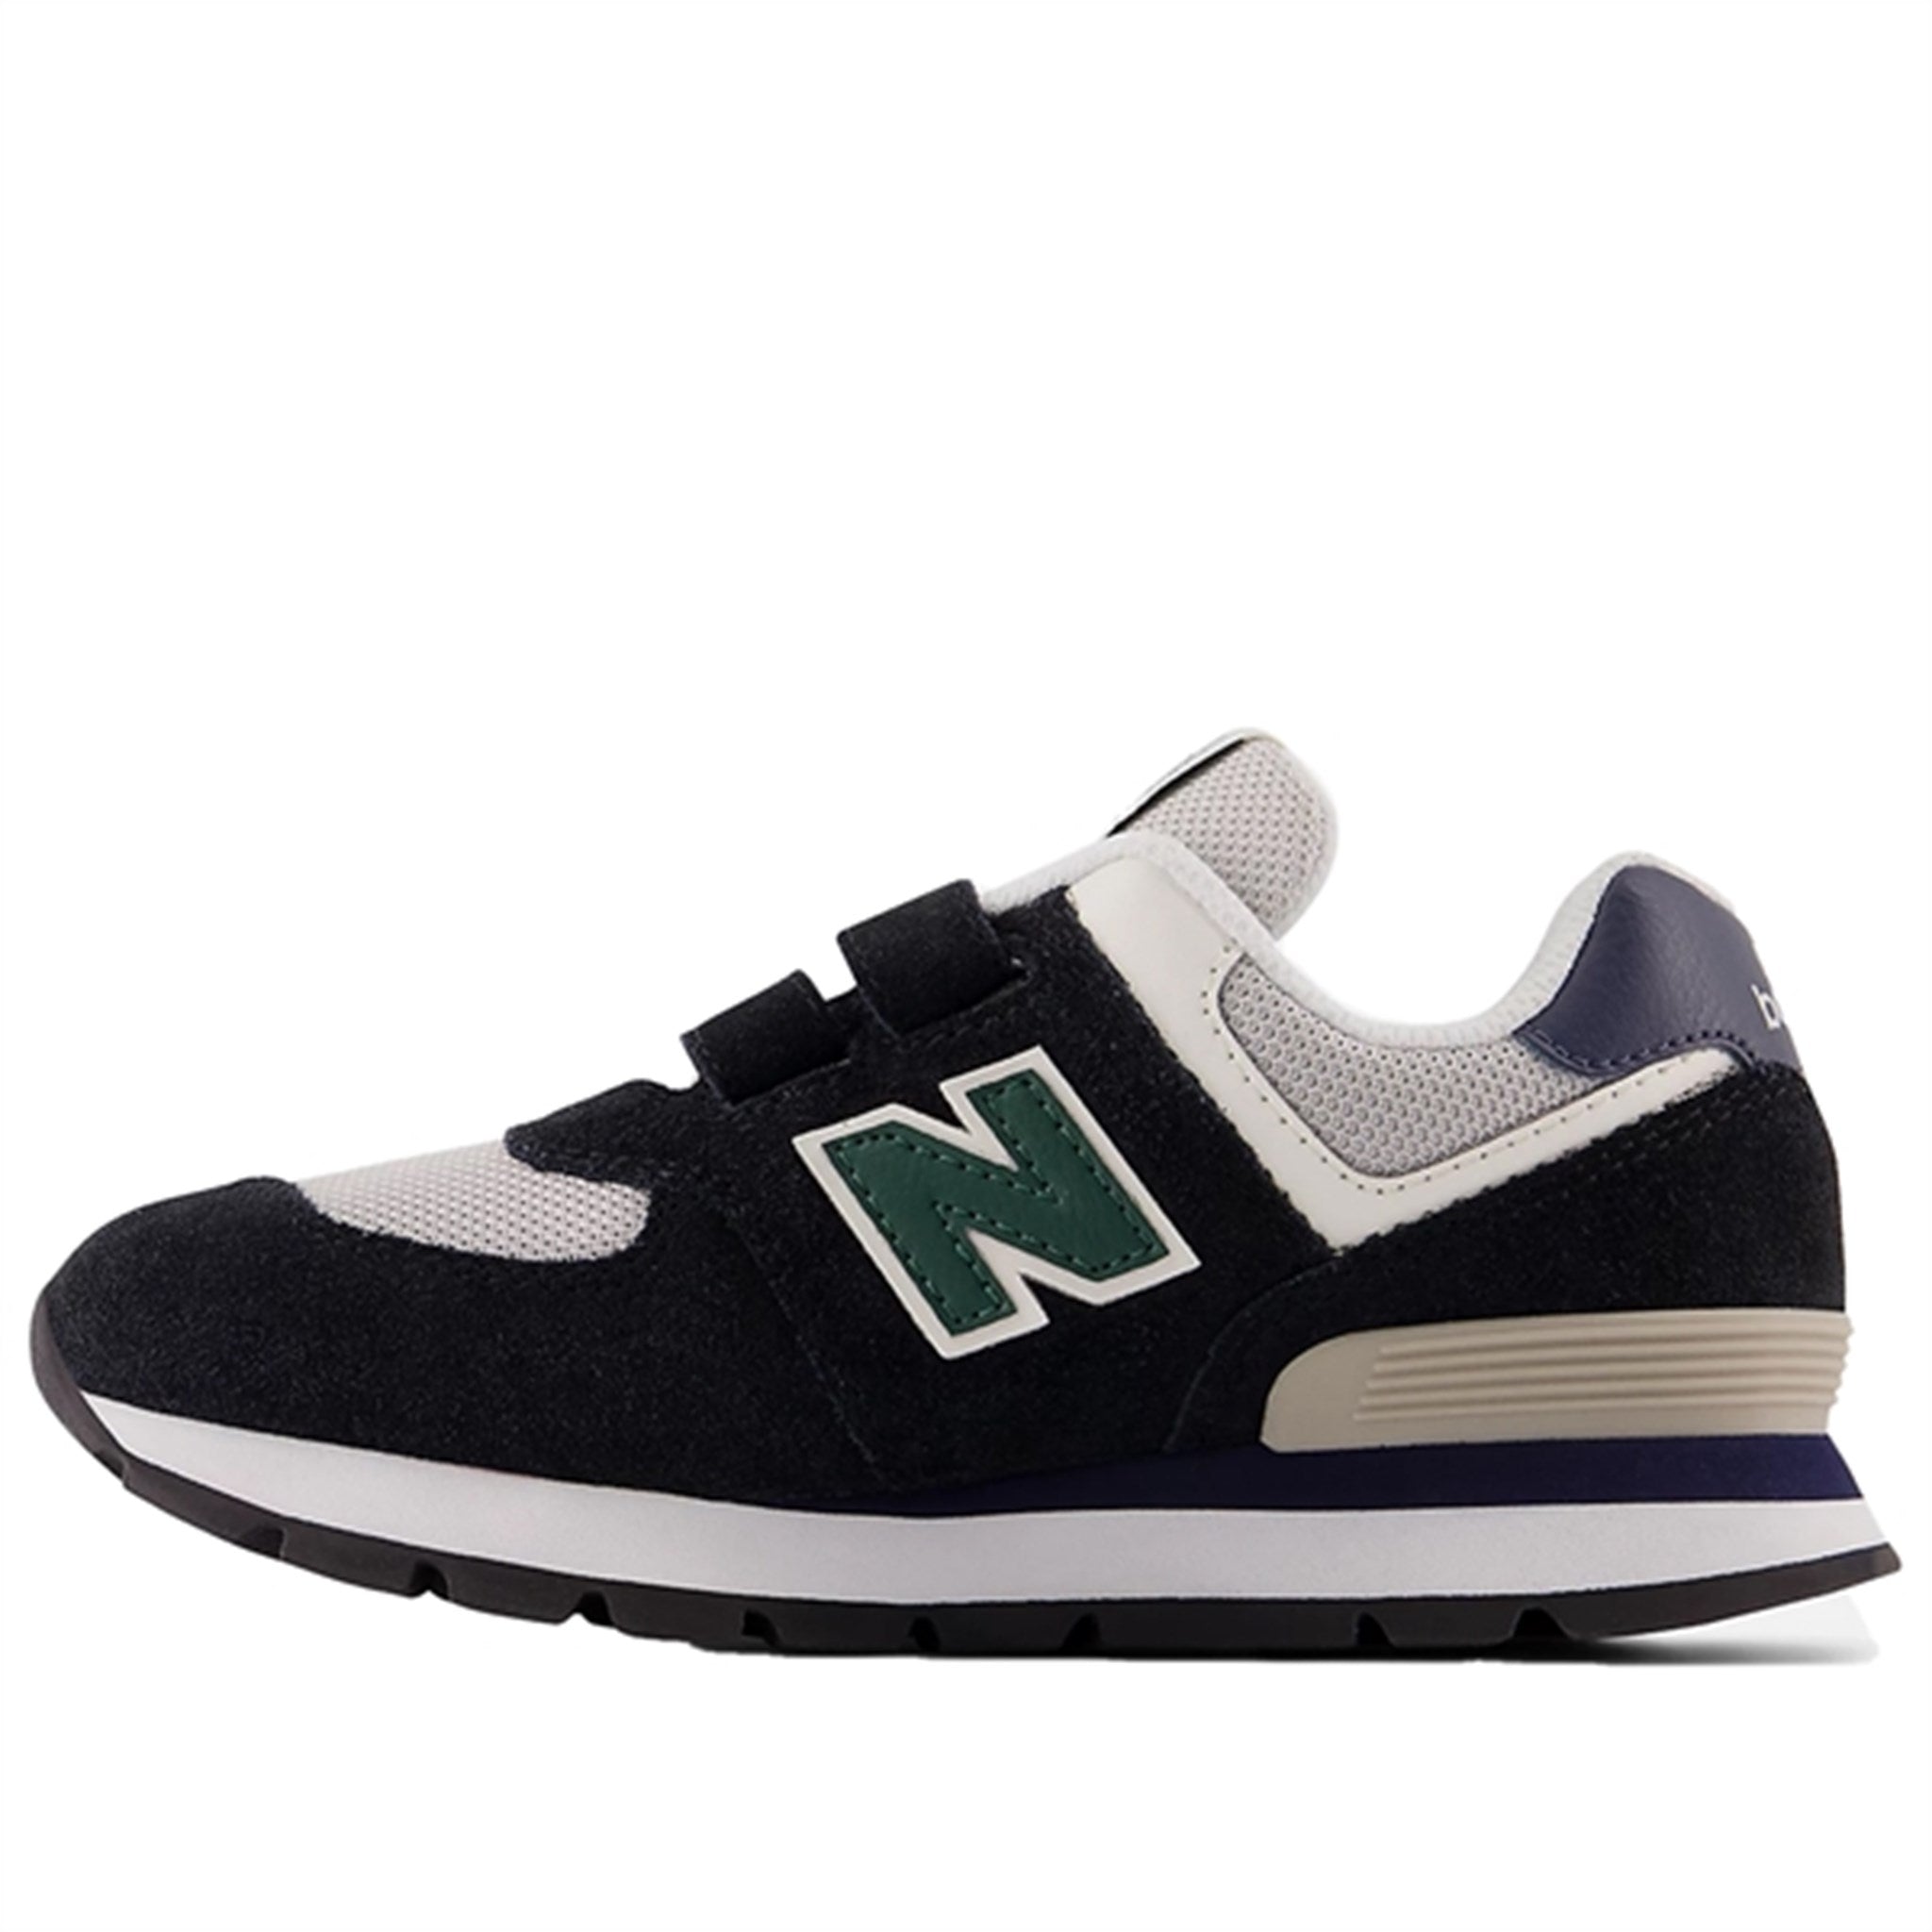 New Balance 574 Black/Navy/Nightwatch Green Sneakers 3